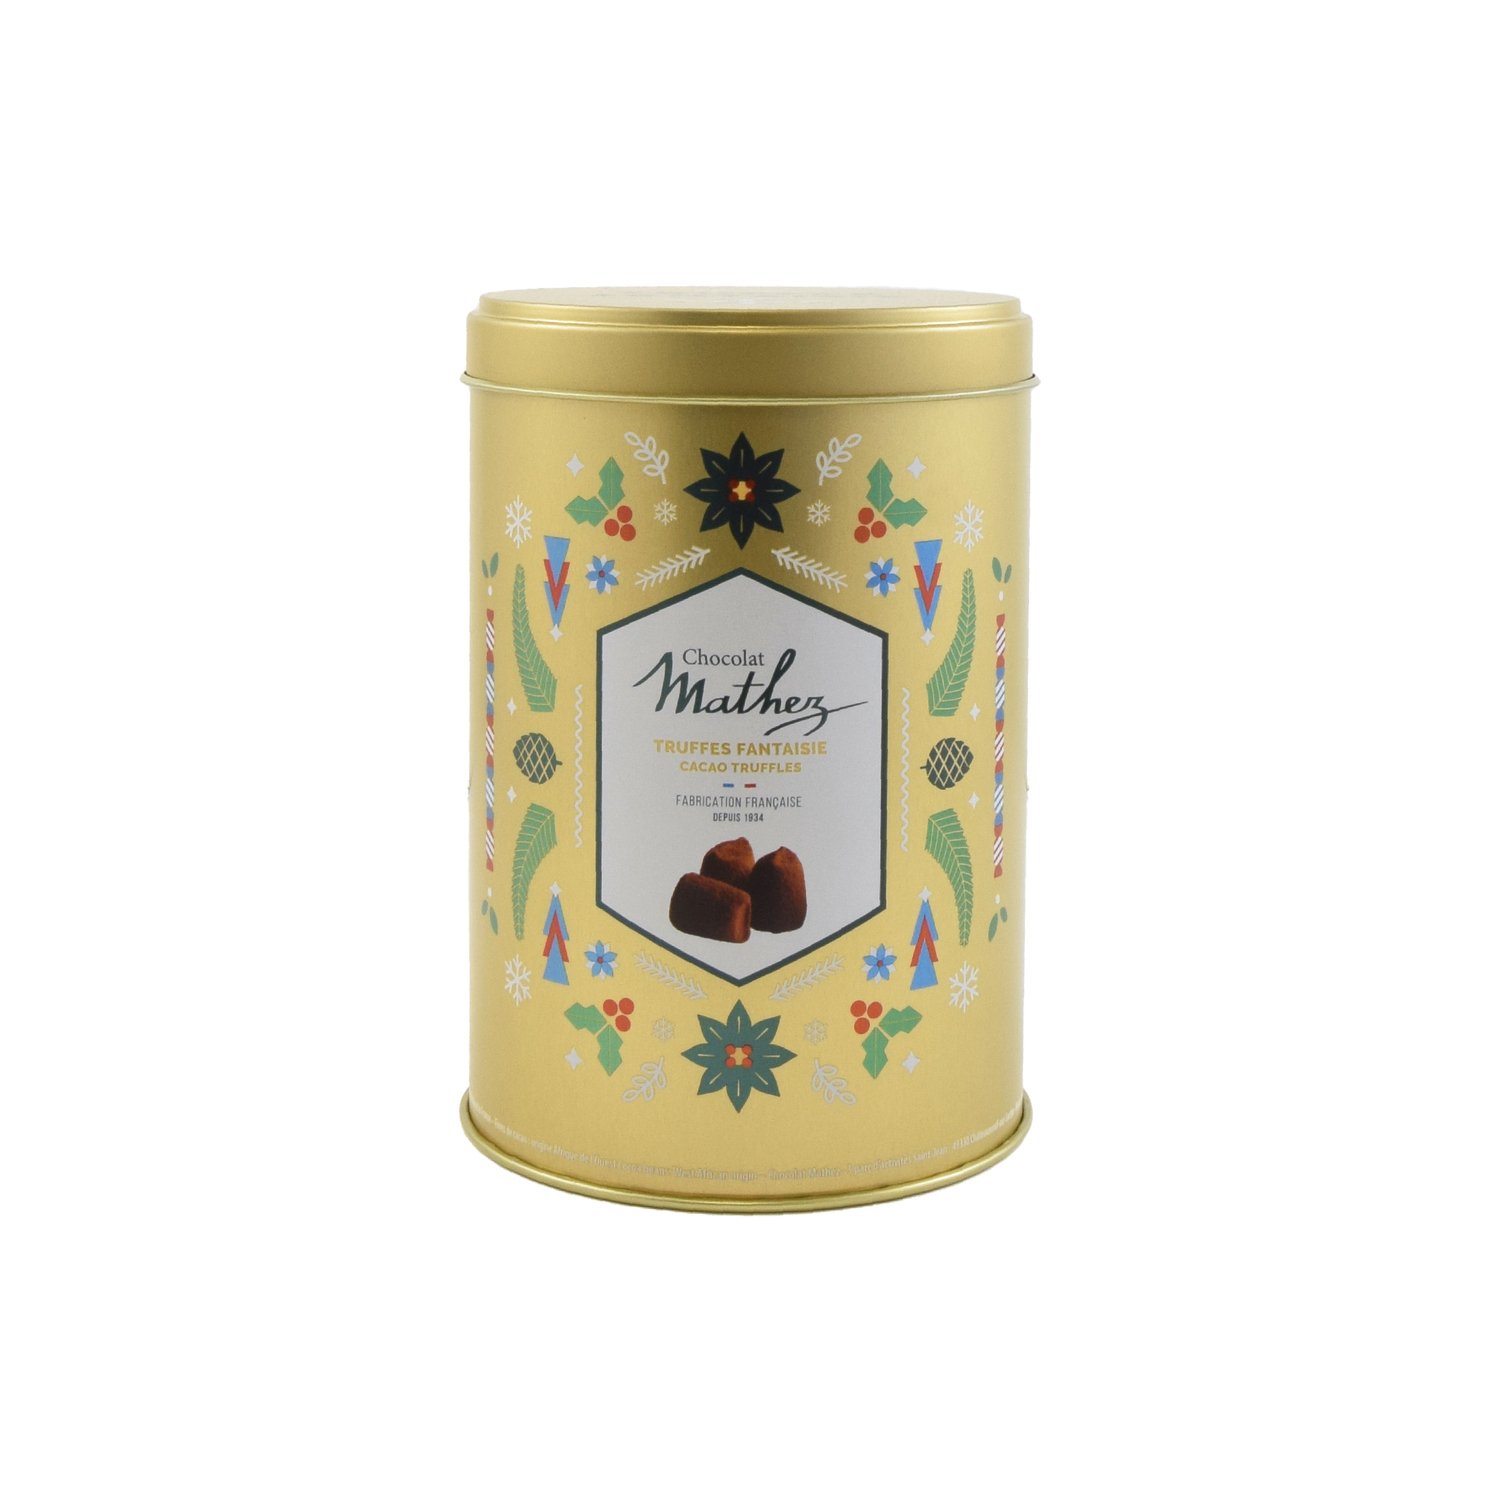 Mathez original French cocoa truffles in gold Christmas design tin - 10x500g